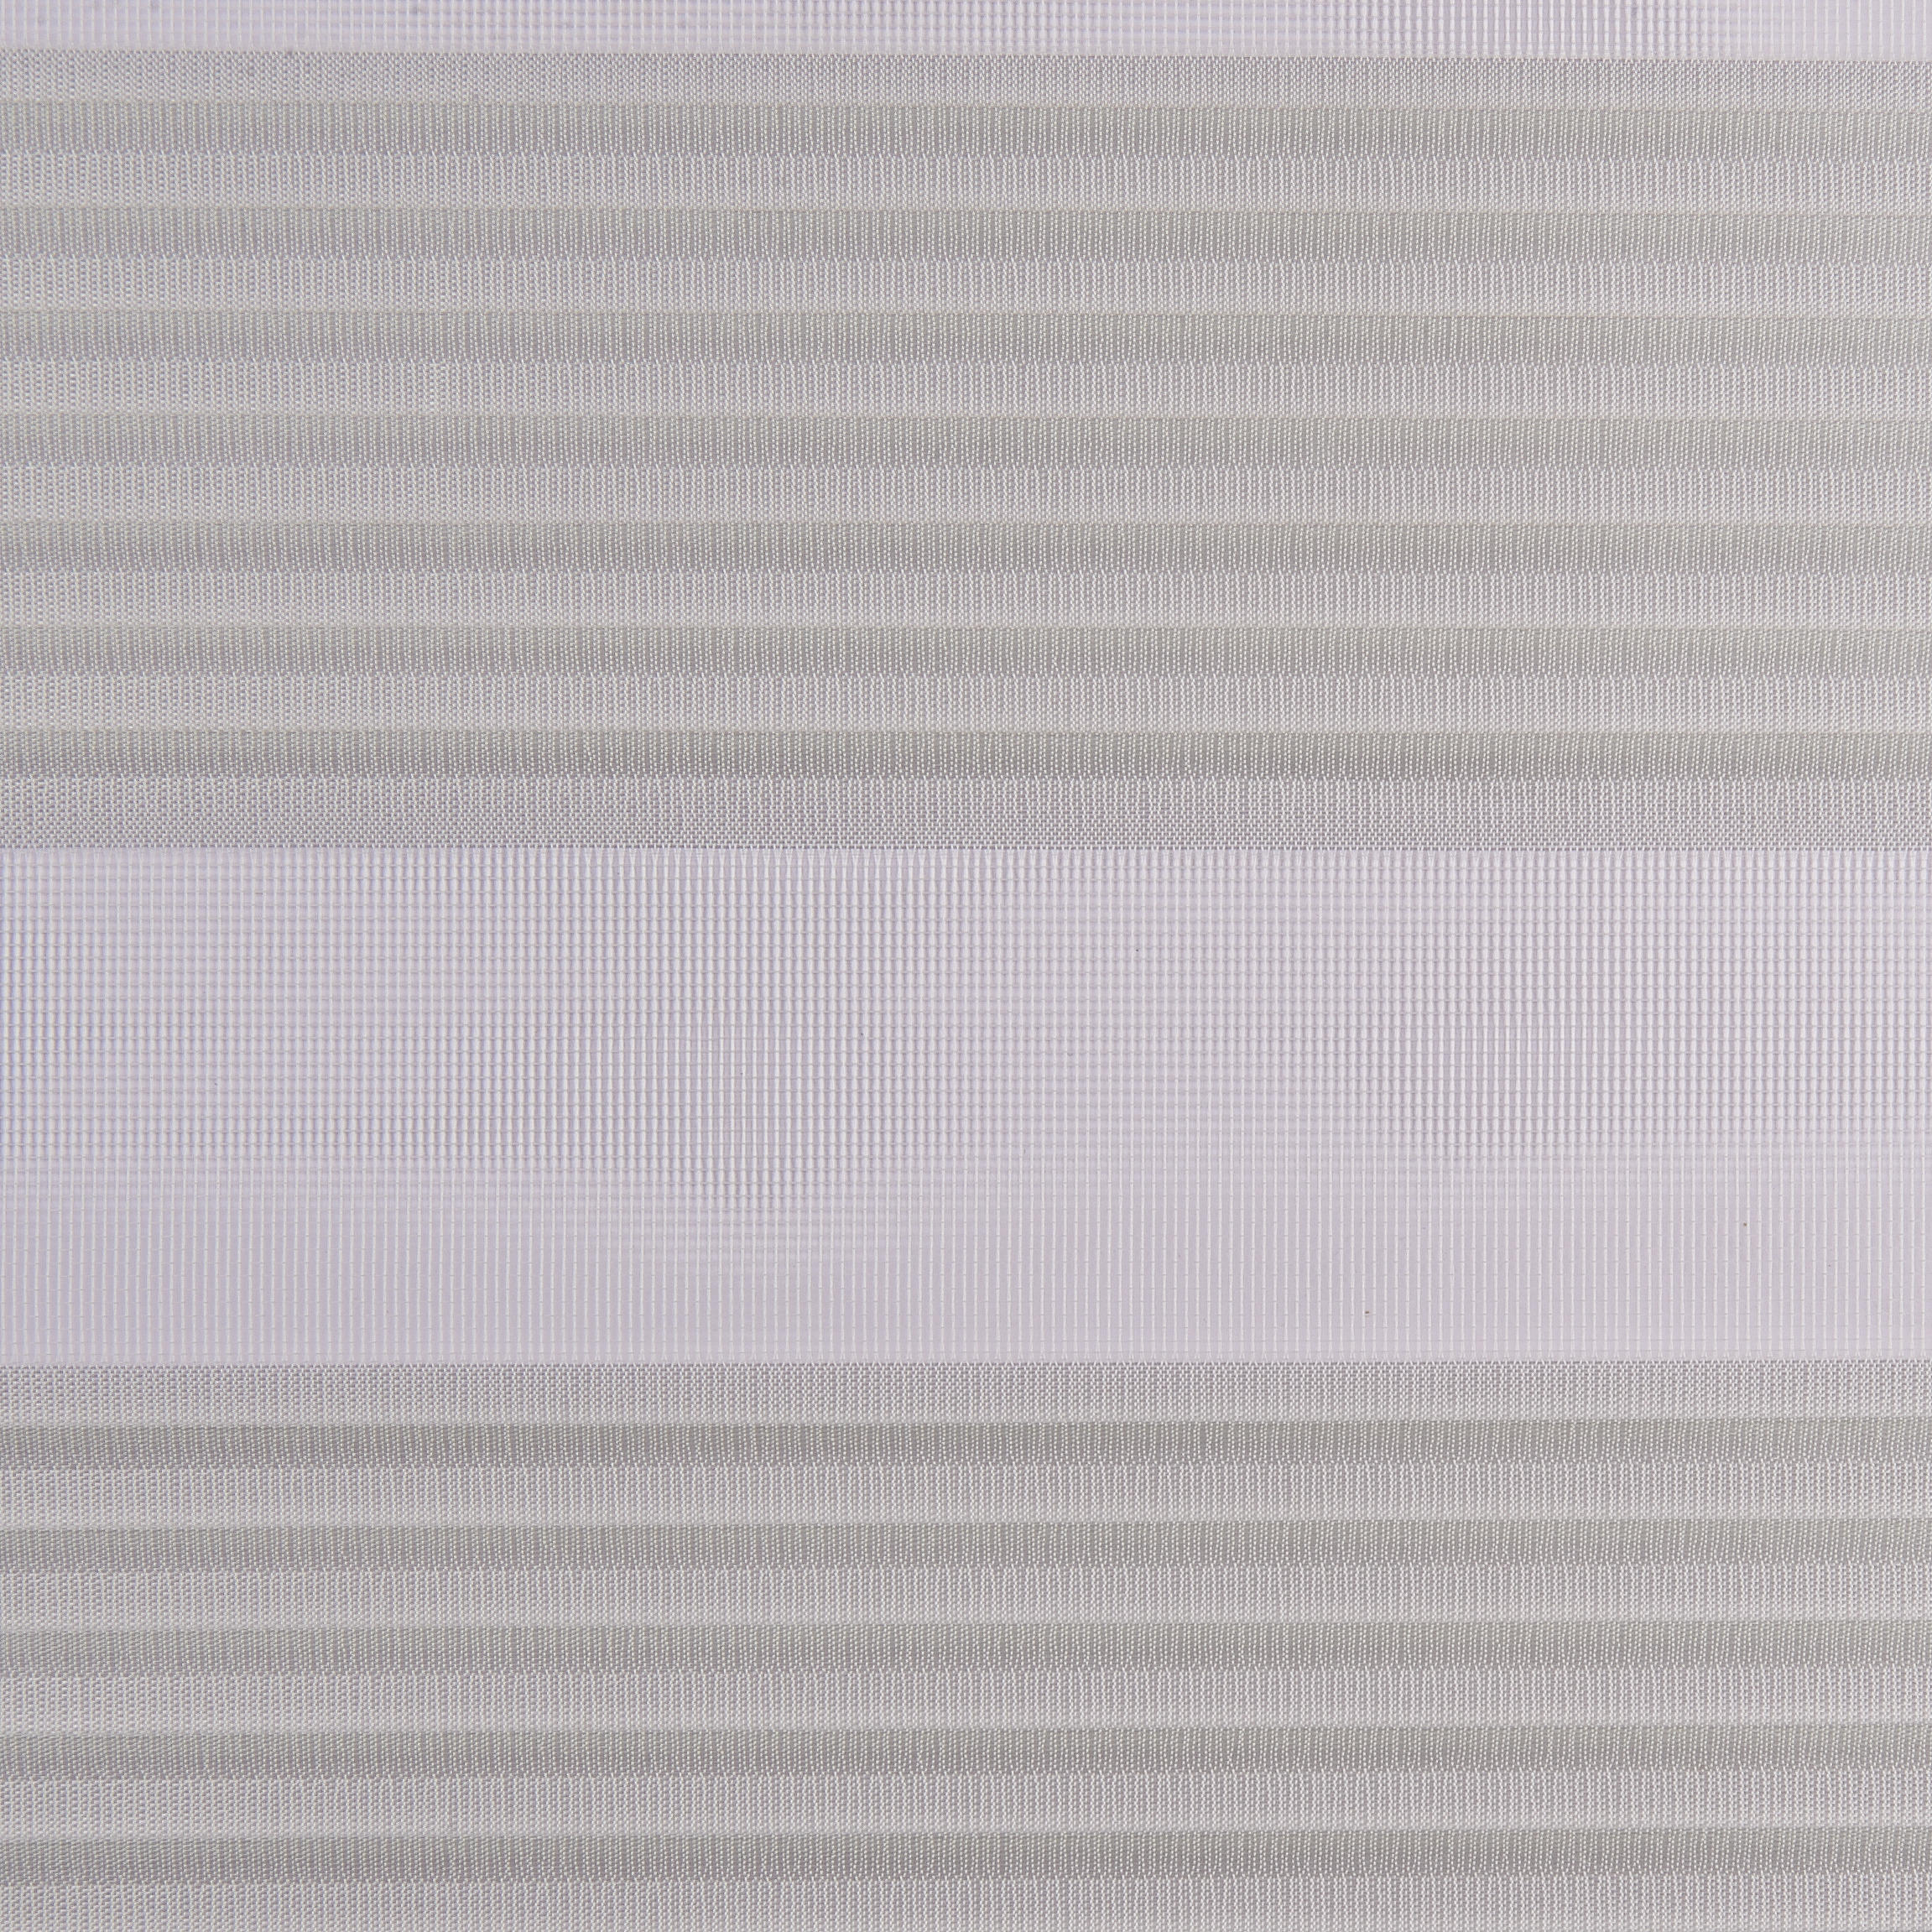 Schiebevorhang Timba Weiß B/l: Ca. 60x245 Cm Timba - weiß (60,00/245,00cm)